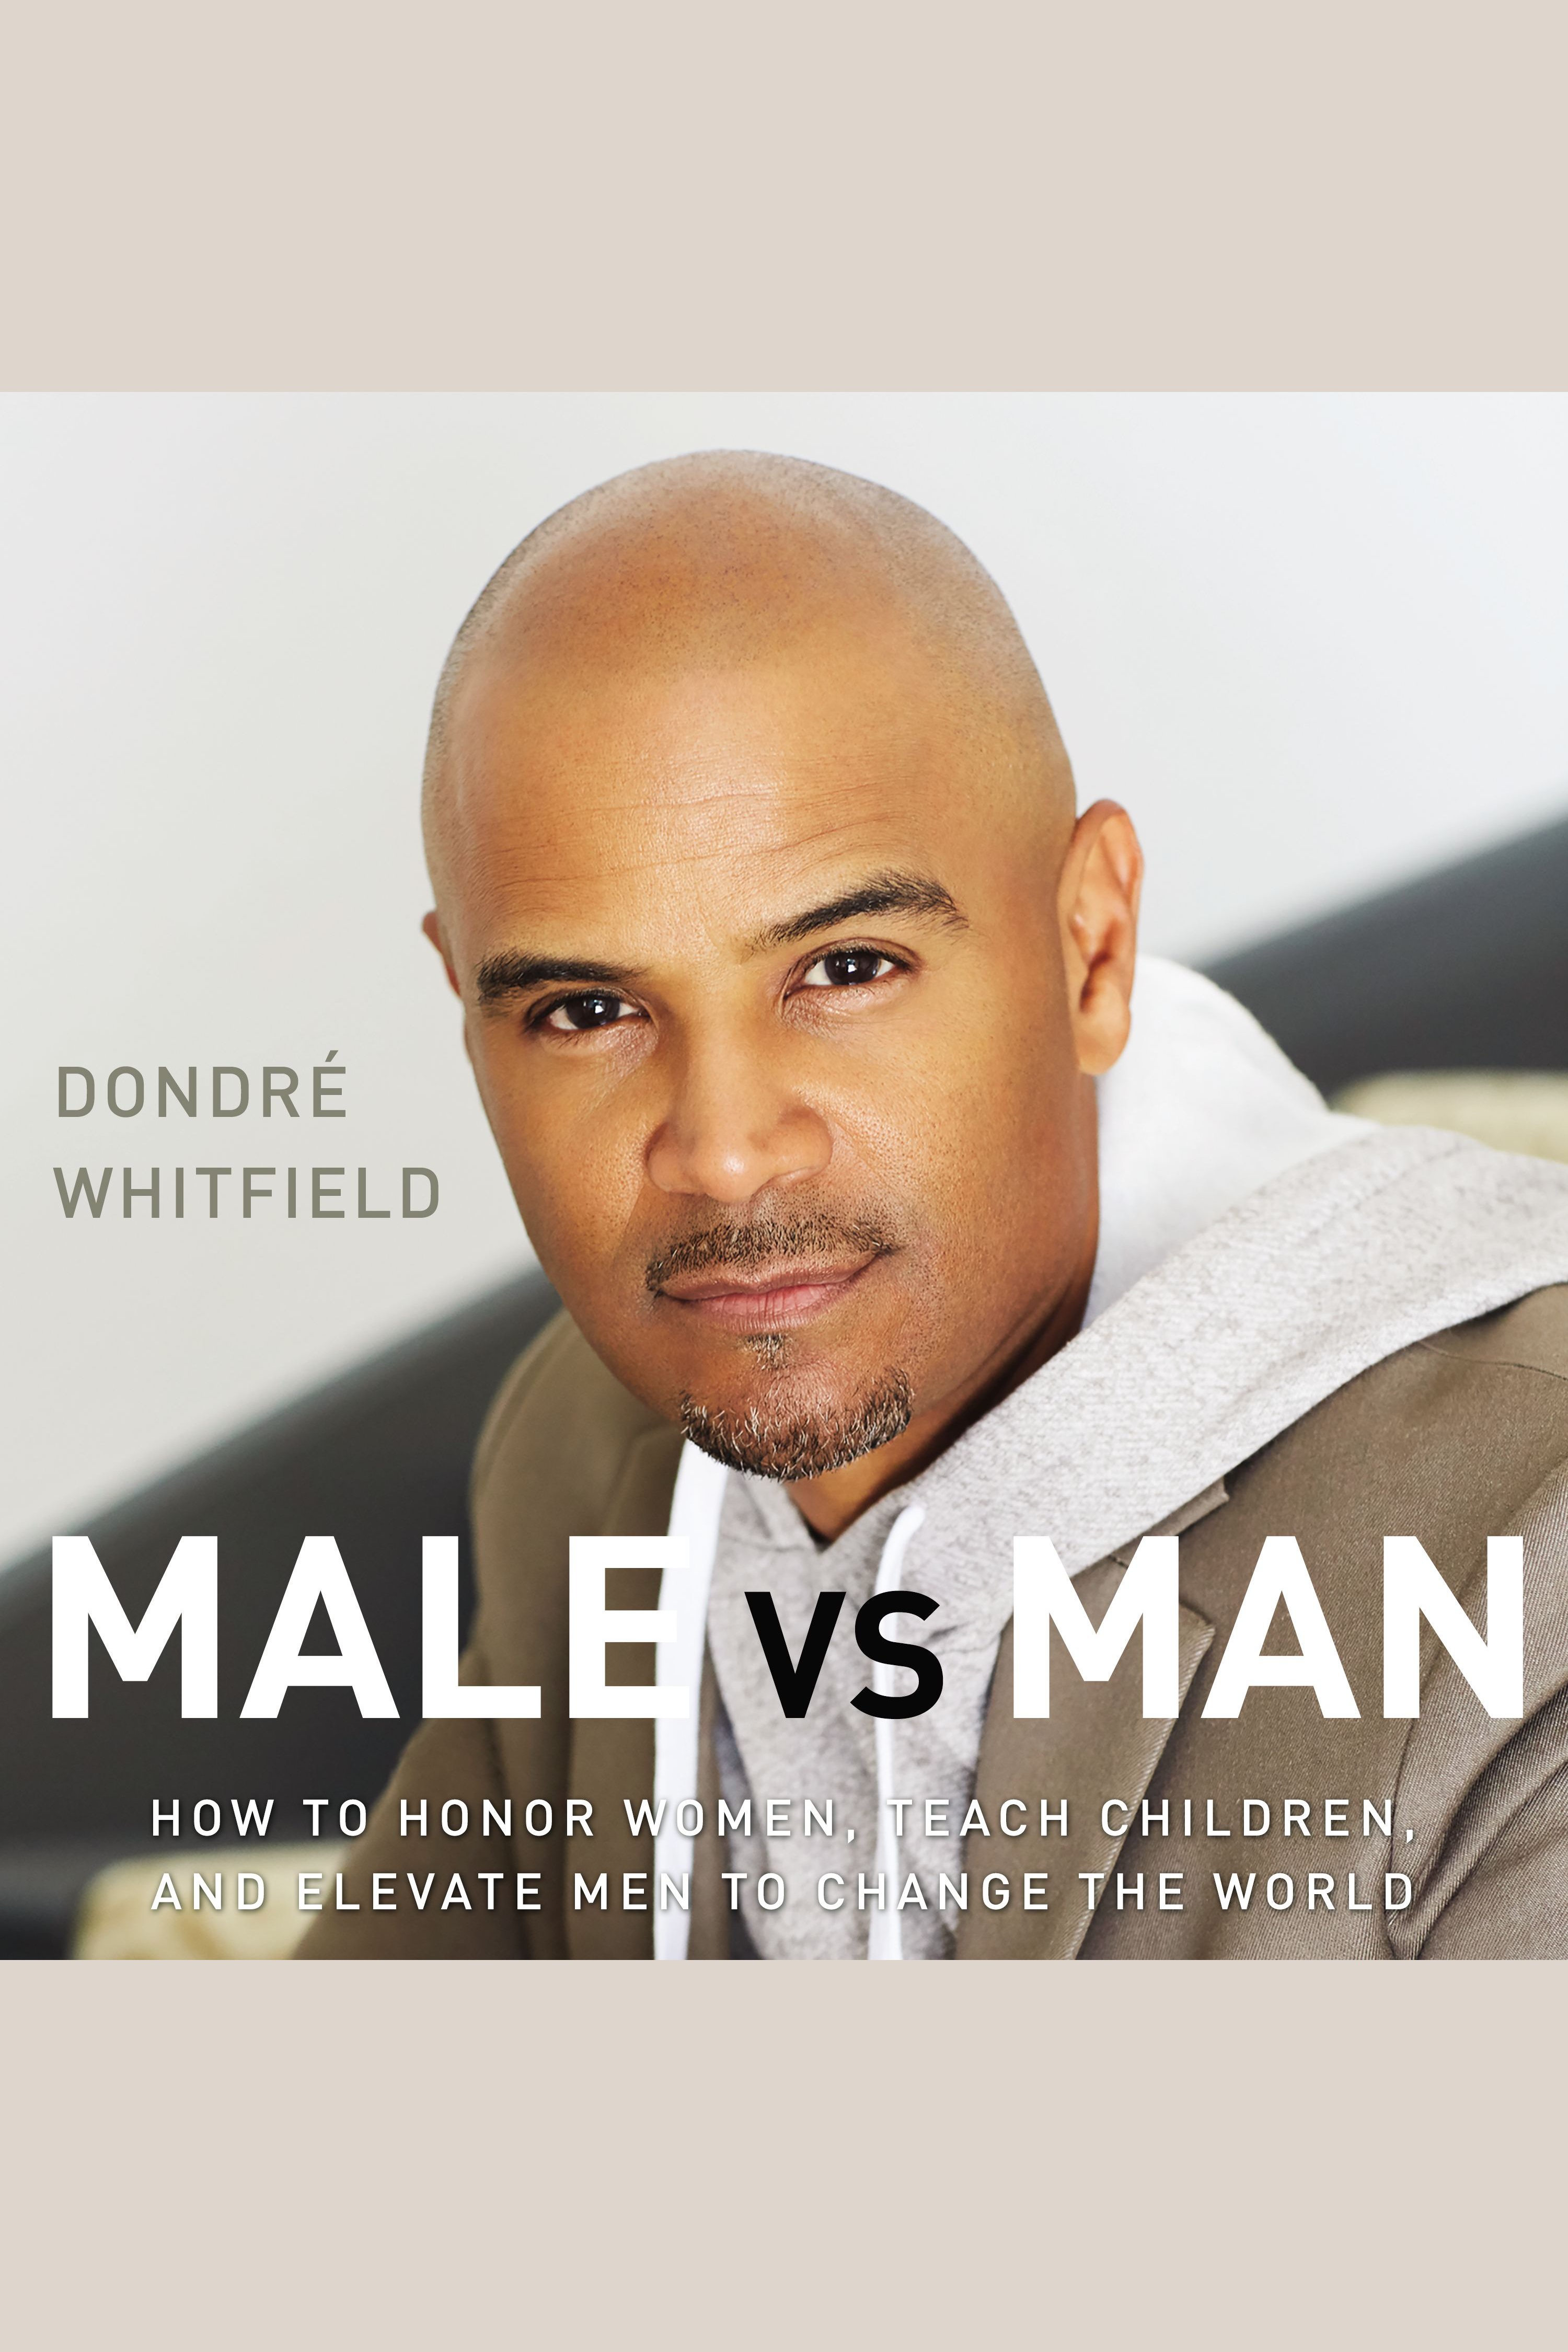 Male vs. Man Honoring Women, Teaching Children, Elevating Men, to Change the World cover image